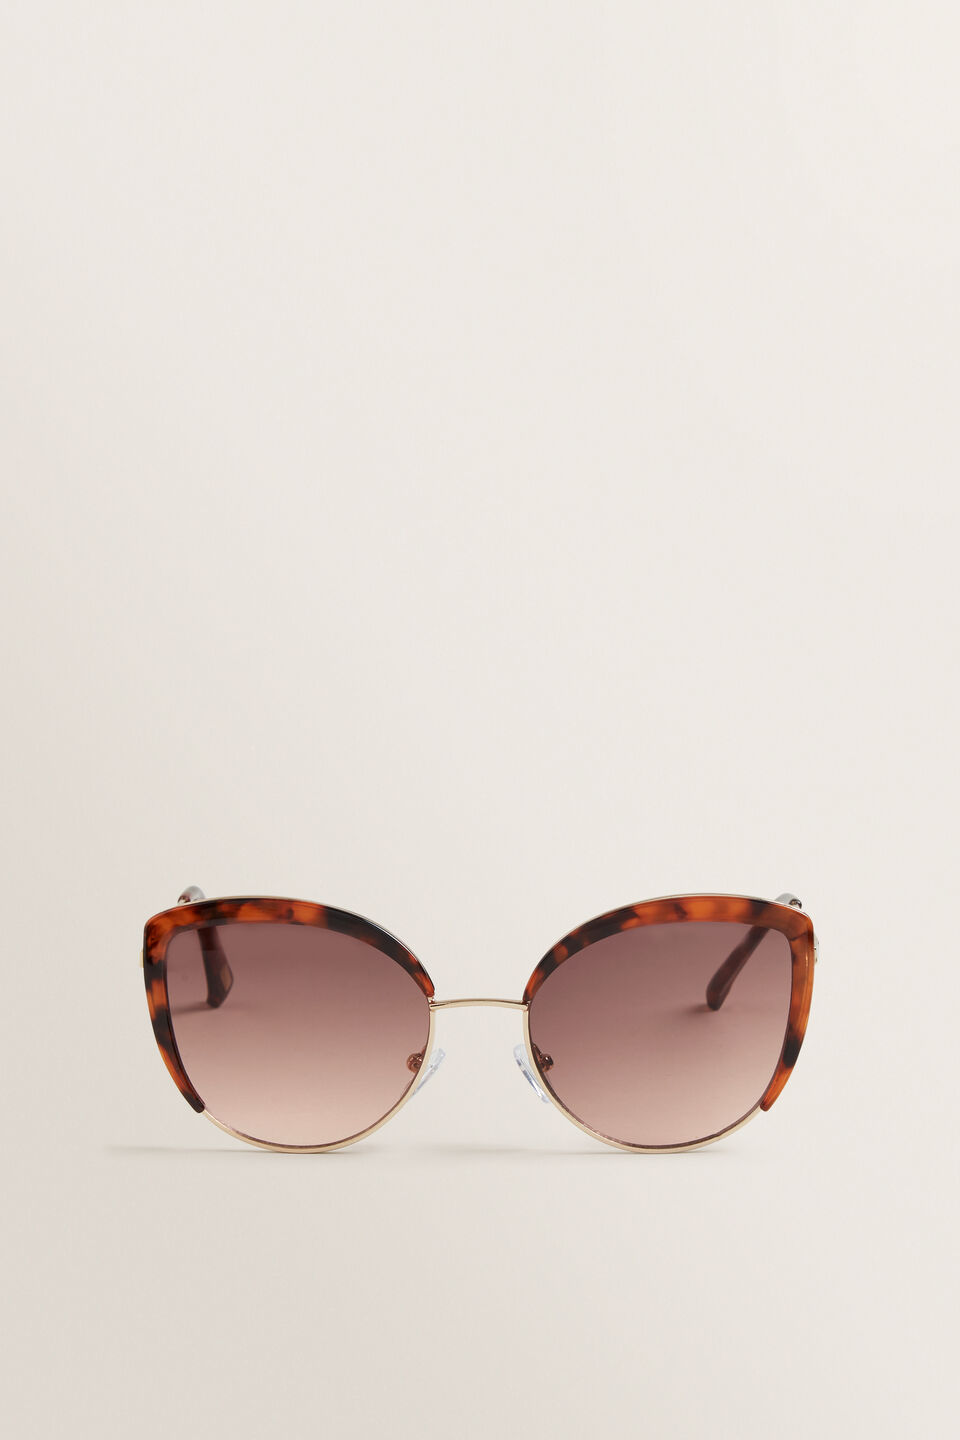 Marni Cat Sunglasses  